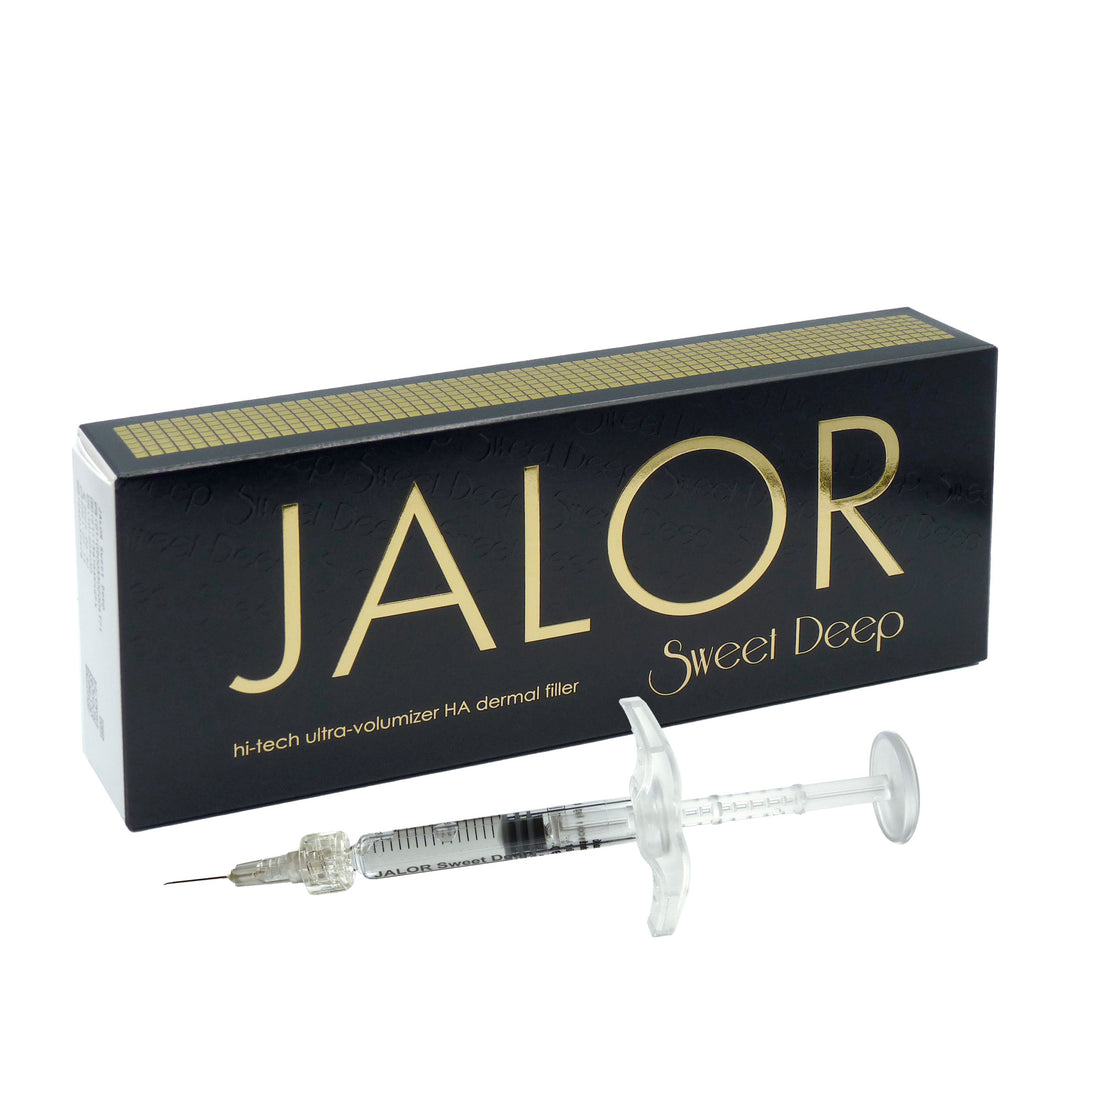 JALOR SWEET DEEP - Ultra Volumizing Dermal Filler